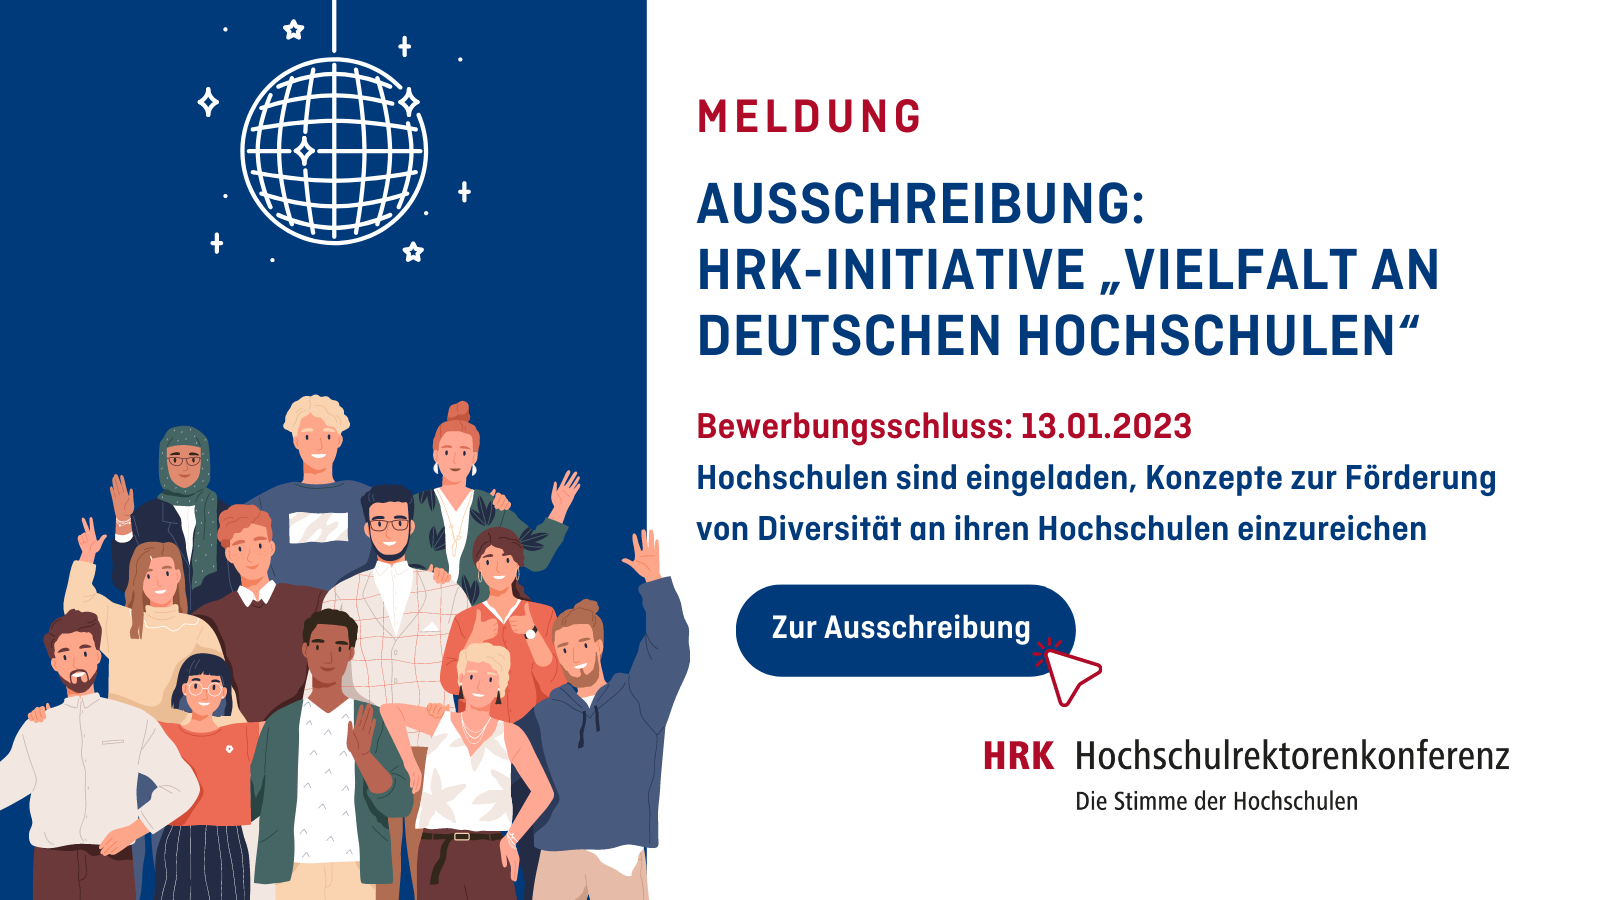 Ausschreibung: HRK-Initiative "Vielfalt an deutschen Hochschulen".